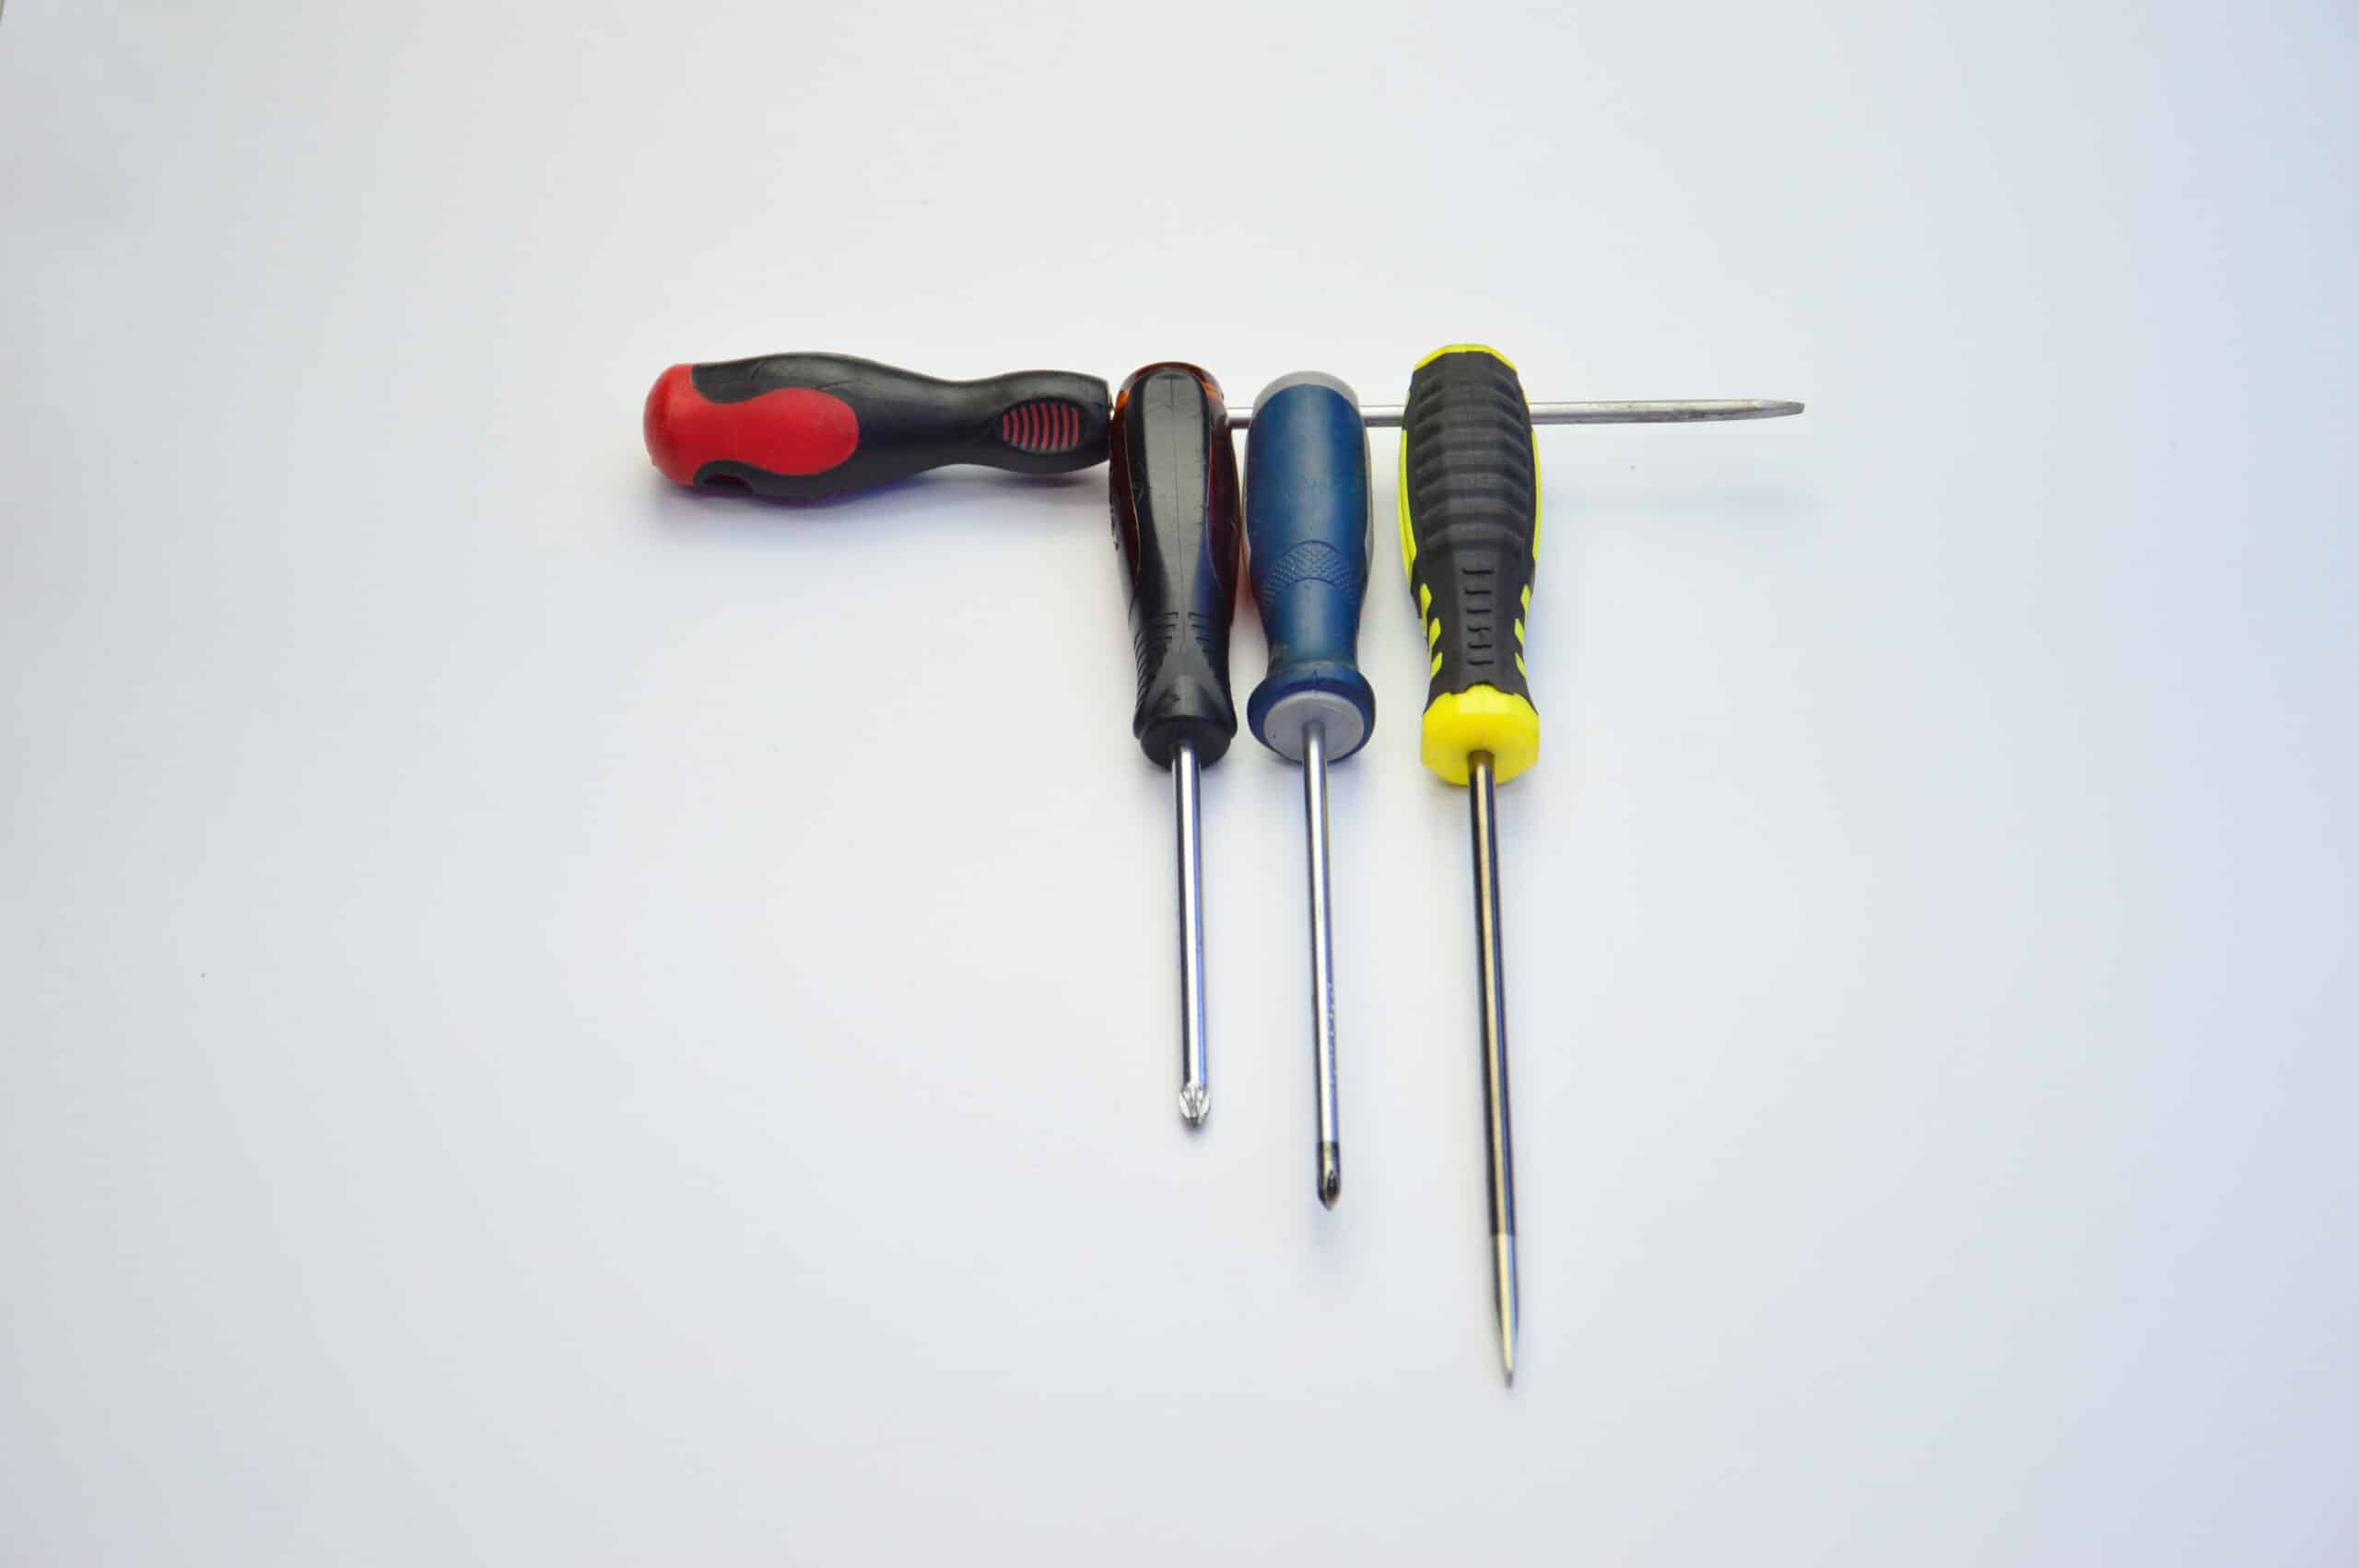 theprecisiontools.com : What screwdriver is suitable for a MacBook Pro?